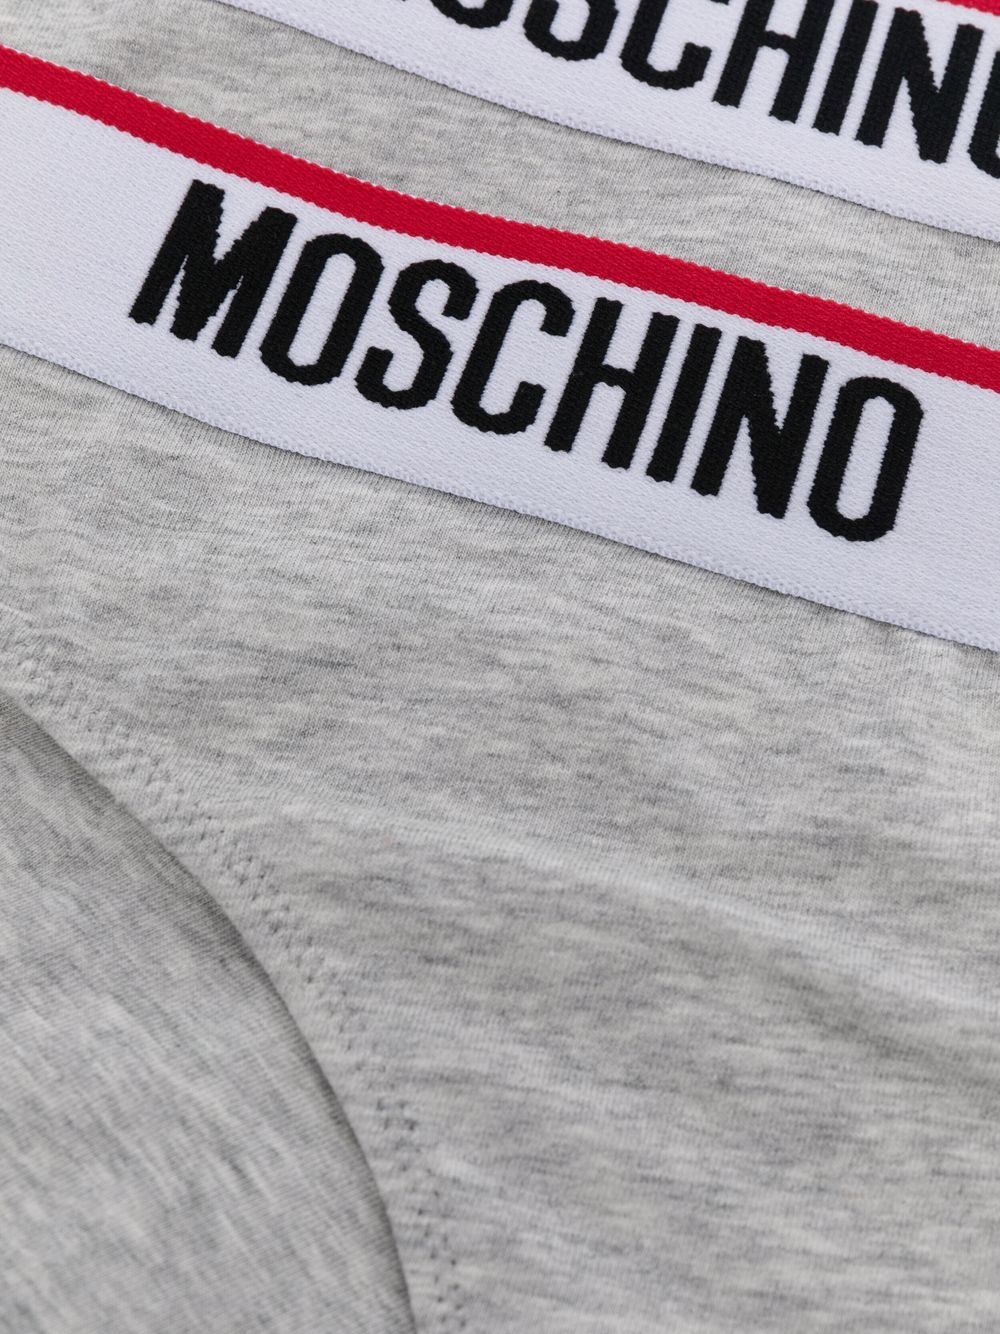 фото Moschino трусы-брифы с логотипом